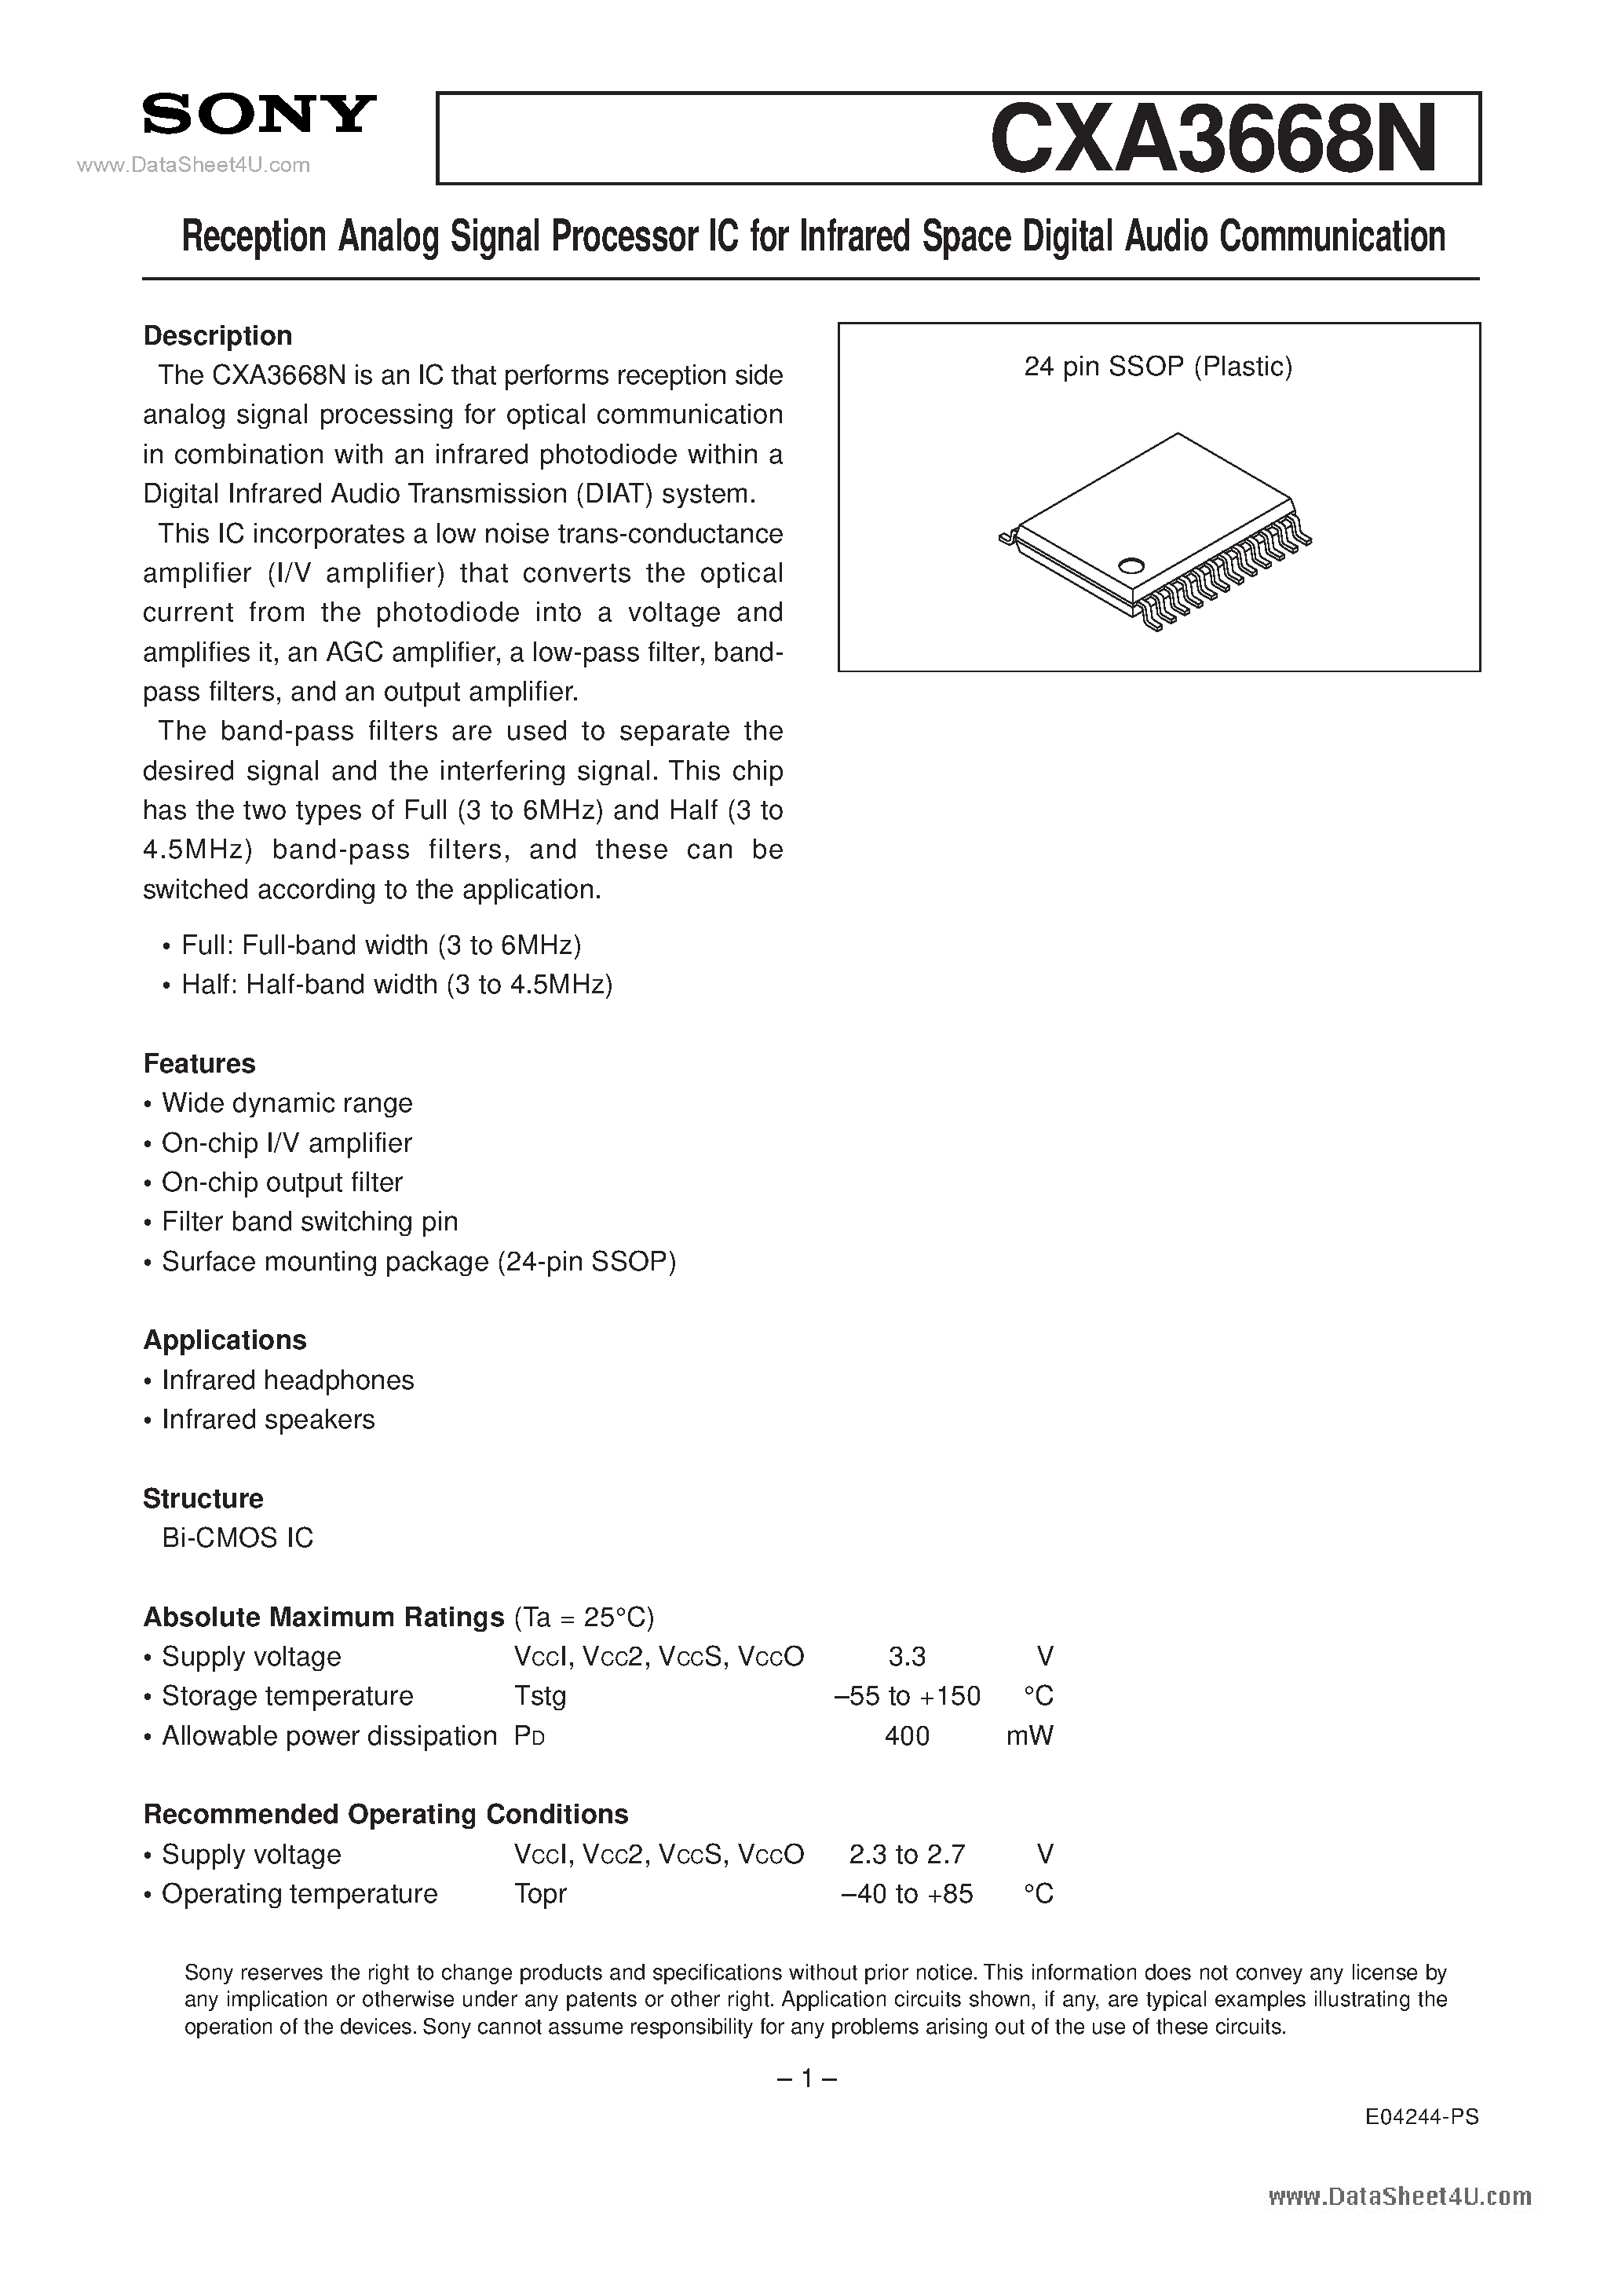 Datasheet CXA3668N - Reception Analog Signal Processor IC page 1